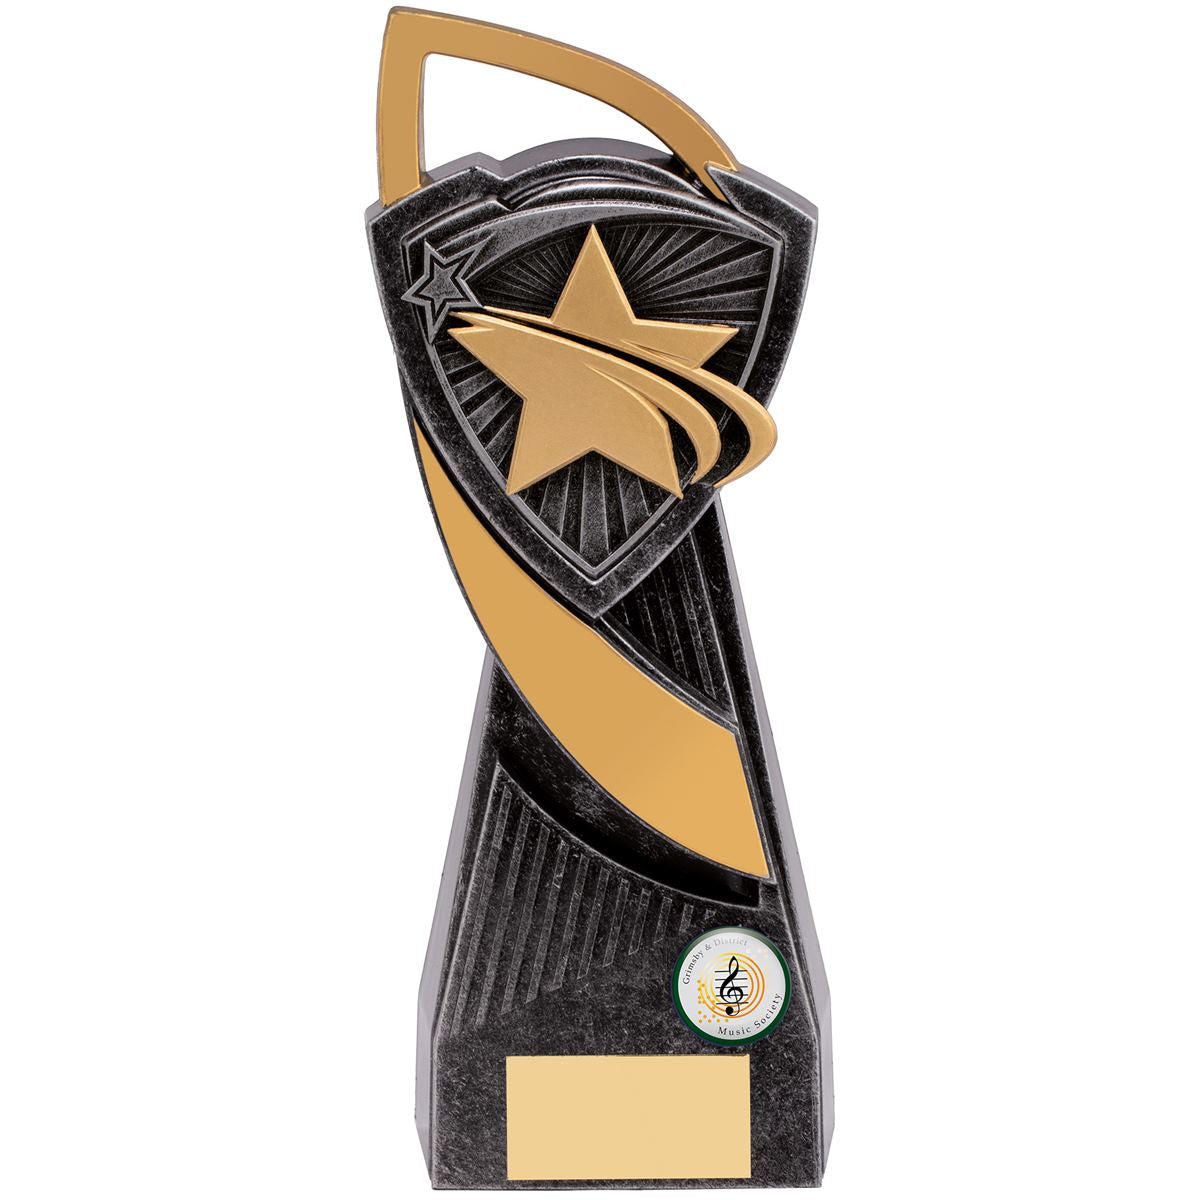 Shooting Star Trophy Award